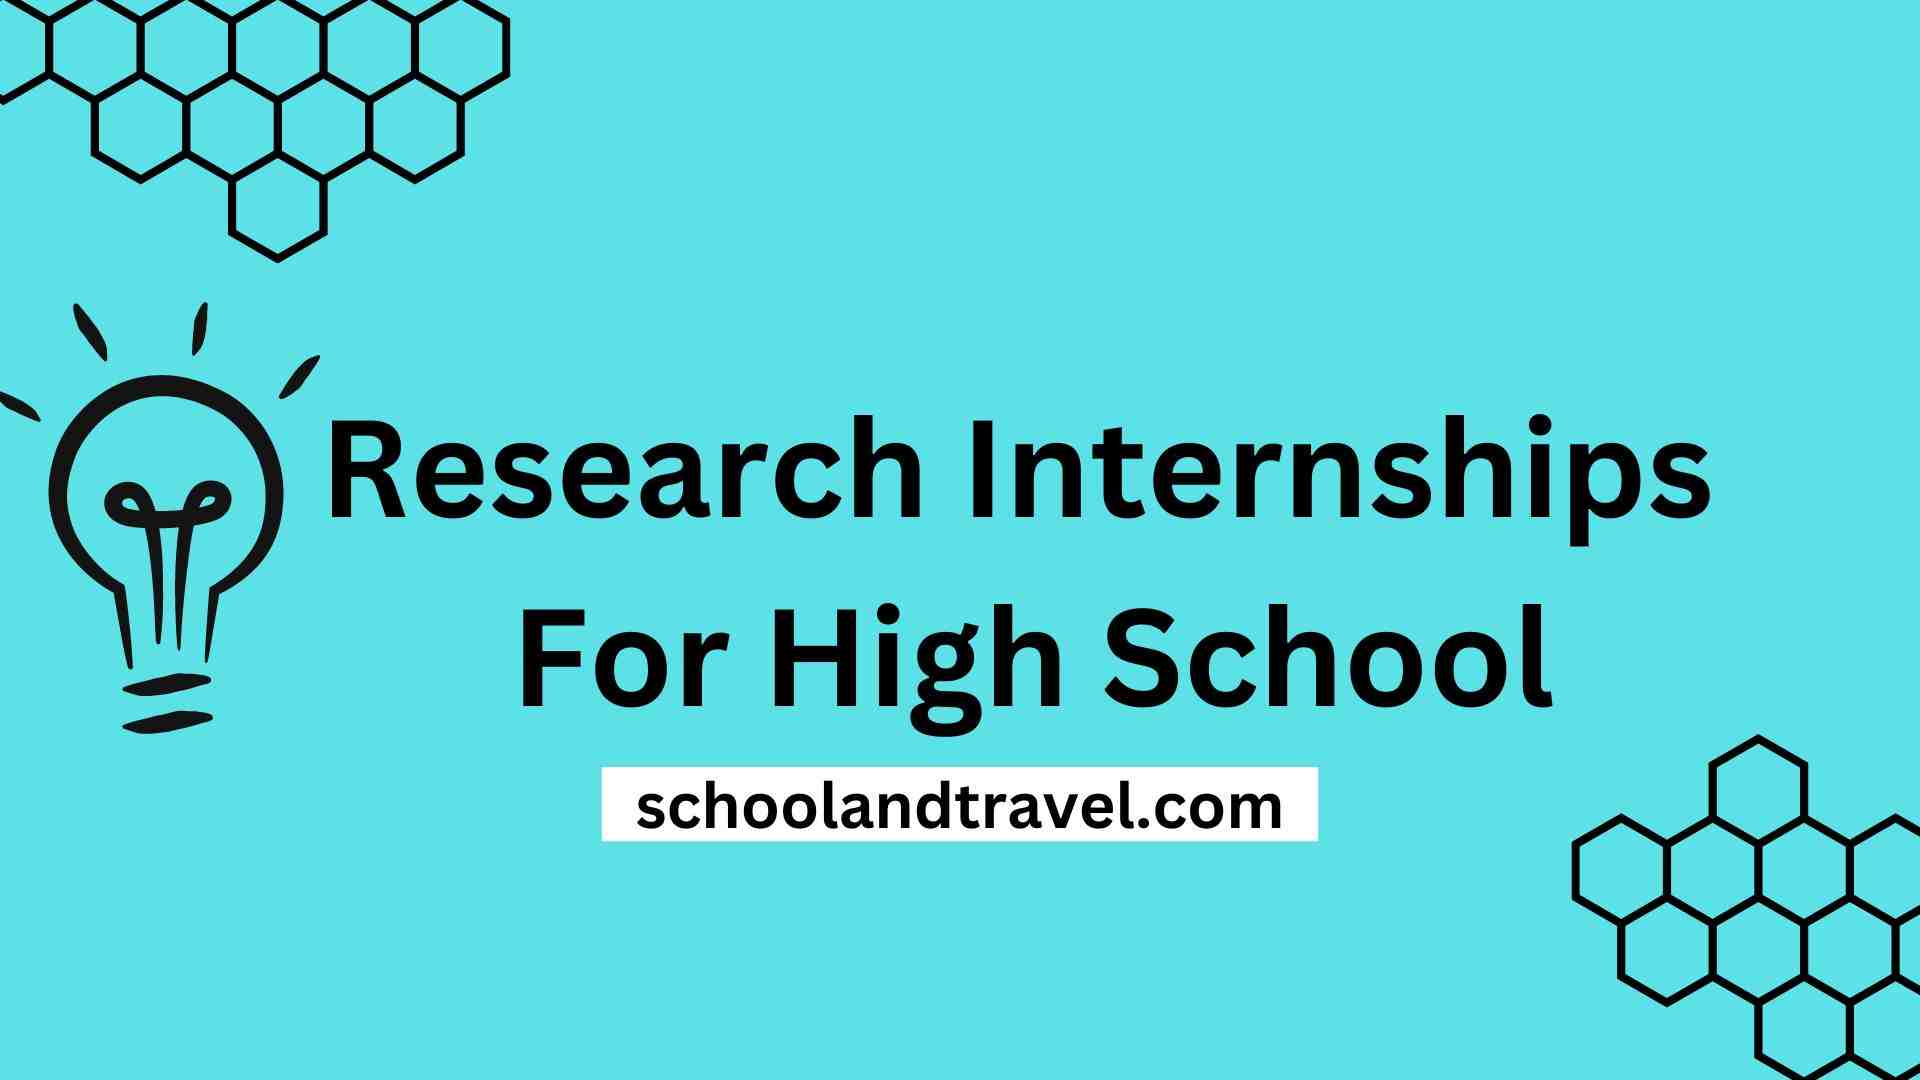 Research Internships For High School